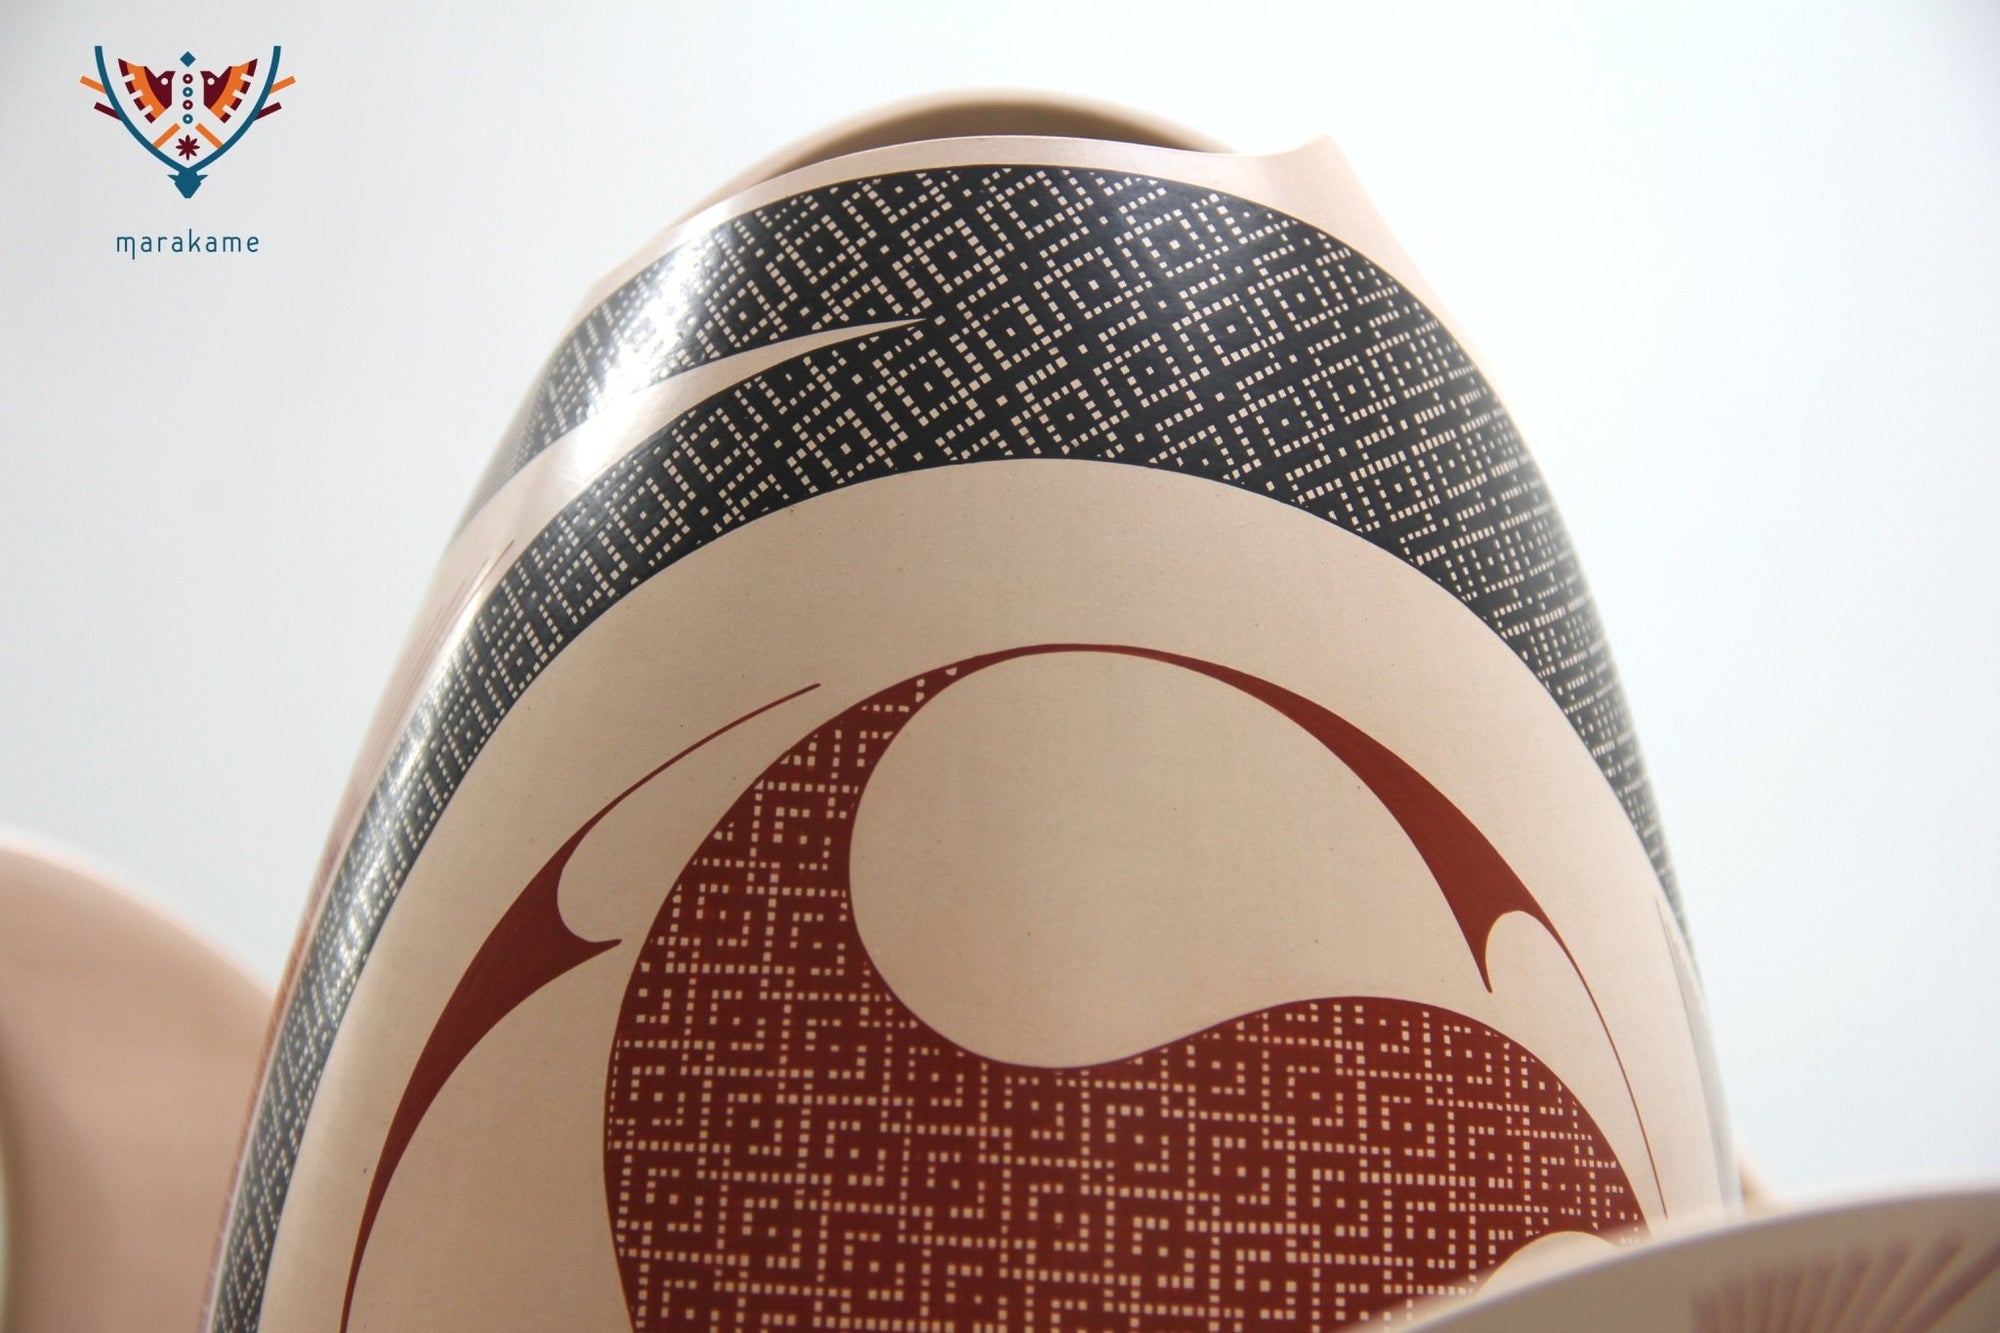 Mata Ortiz Ceramic - Fire - Masterpiece - Huichol Art - マラカメ